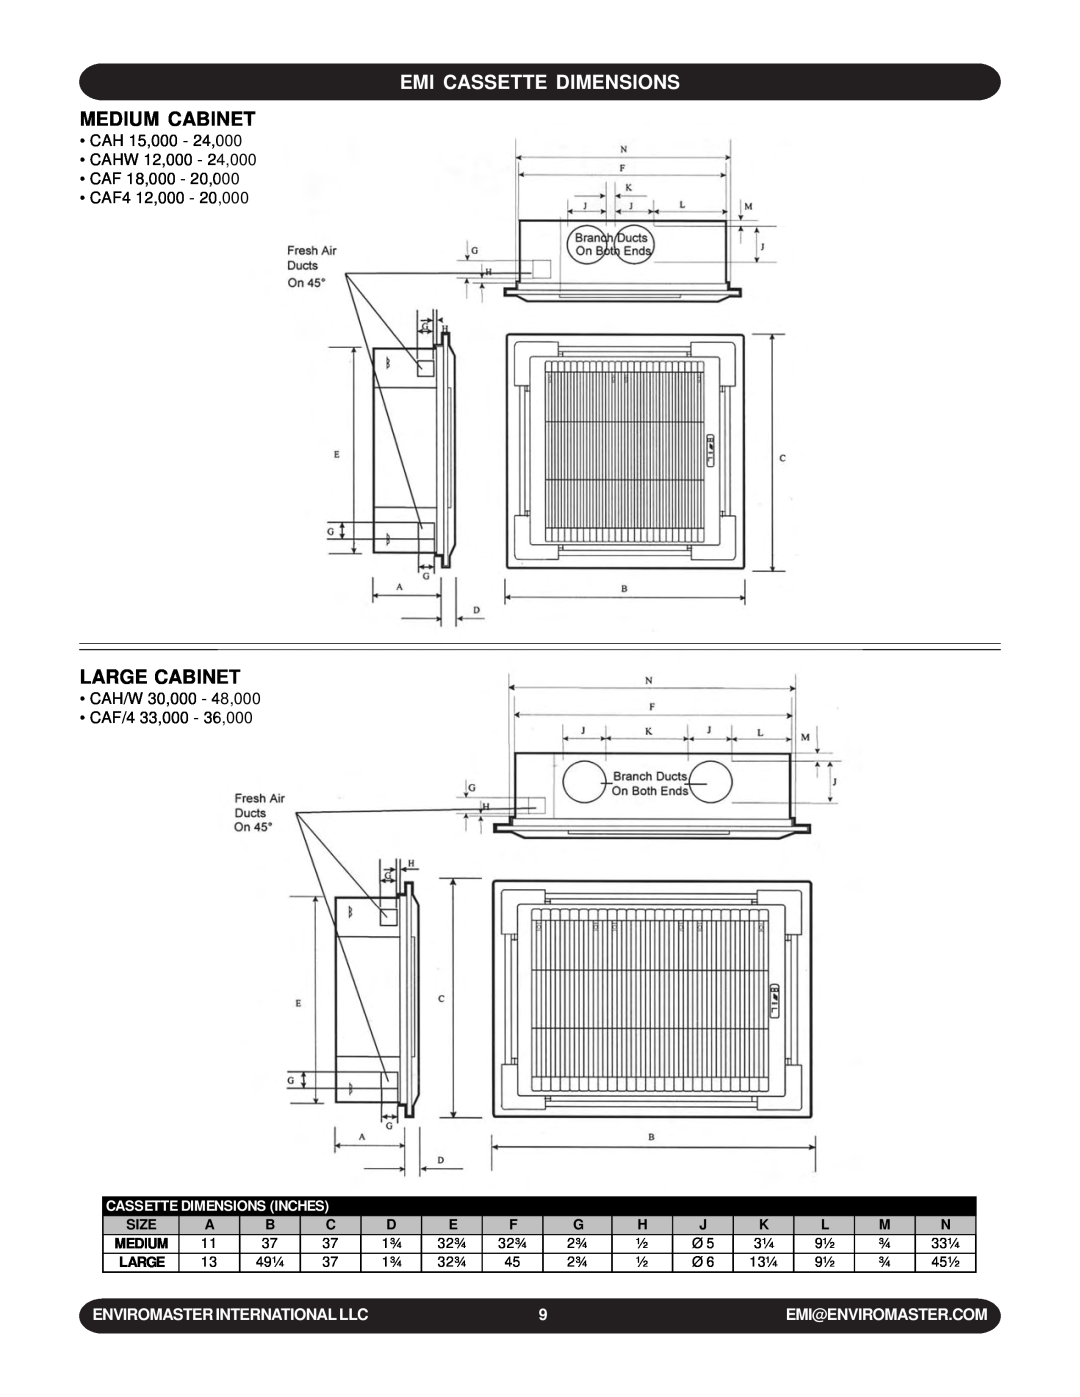 EMI WLCA installation manual Medium Cabinet, Large Cabinet, Emi Cassette Dimensions, Enviromaster International Llc, Size 